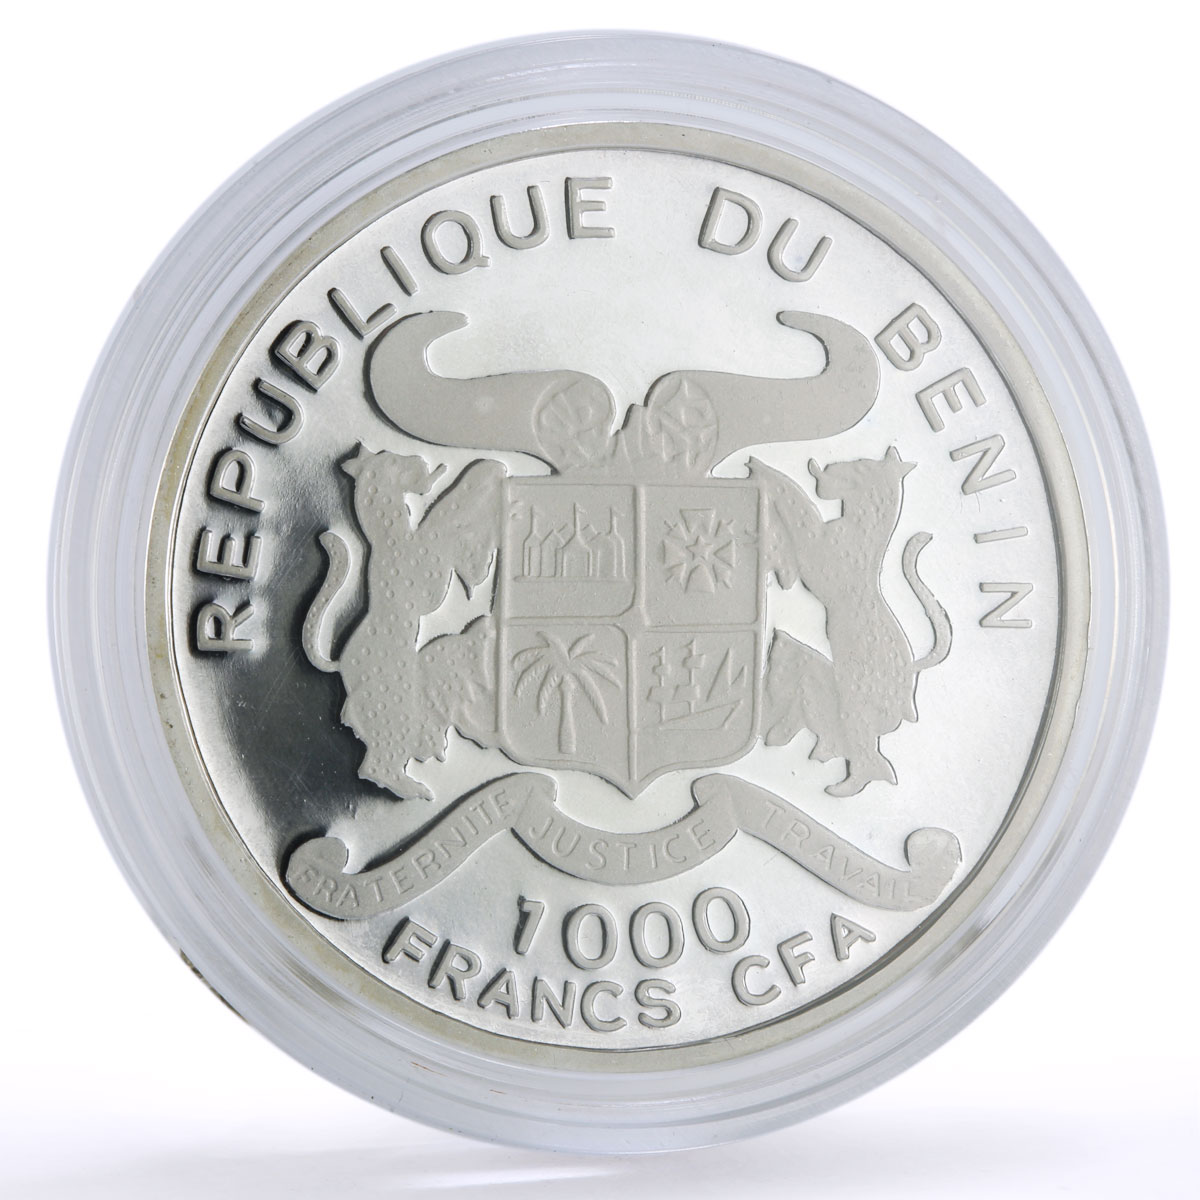 Benin 1000 francs Conservation Wildlife Chameleon Lizard Fauna silver coin 2006